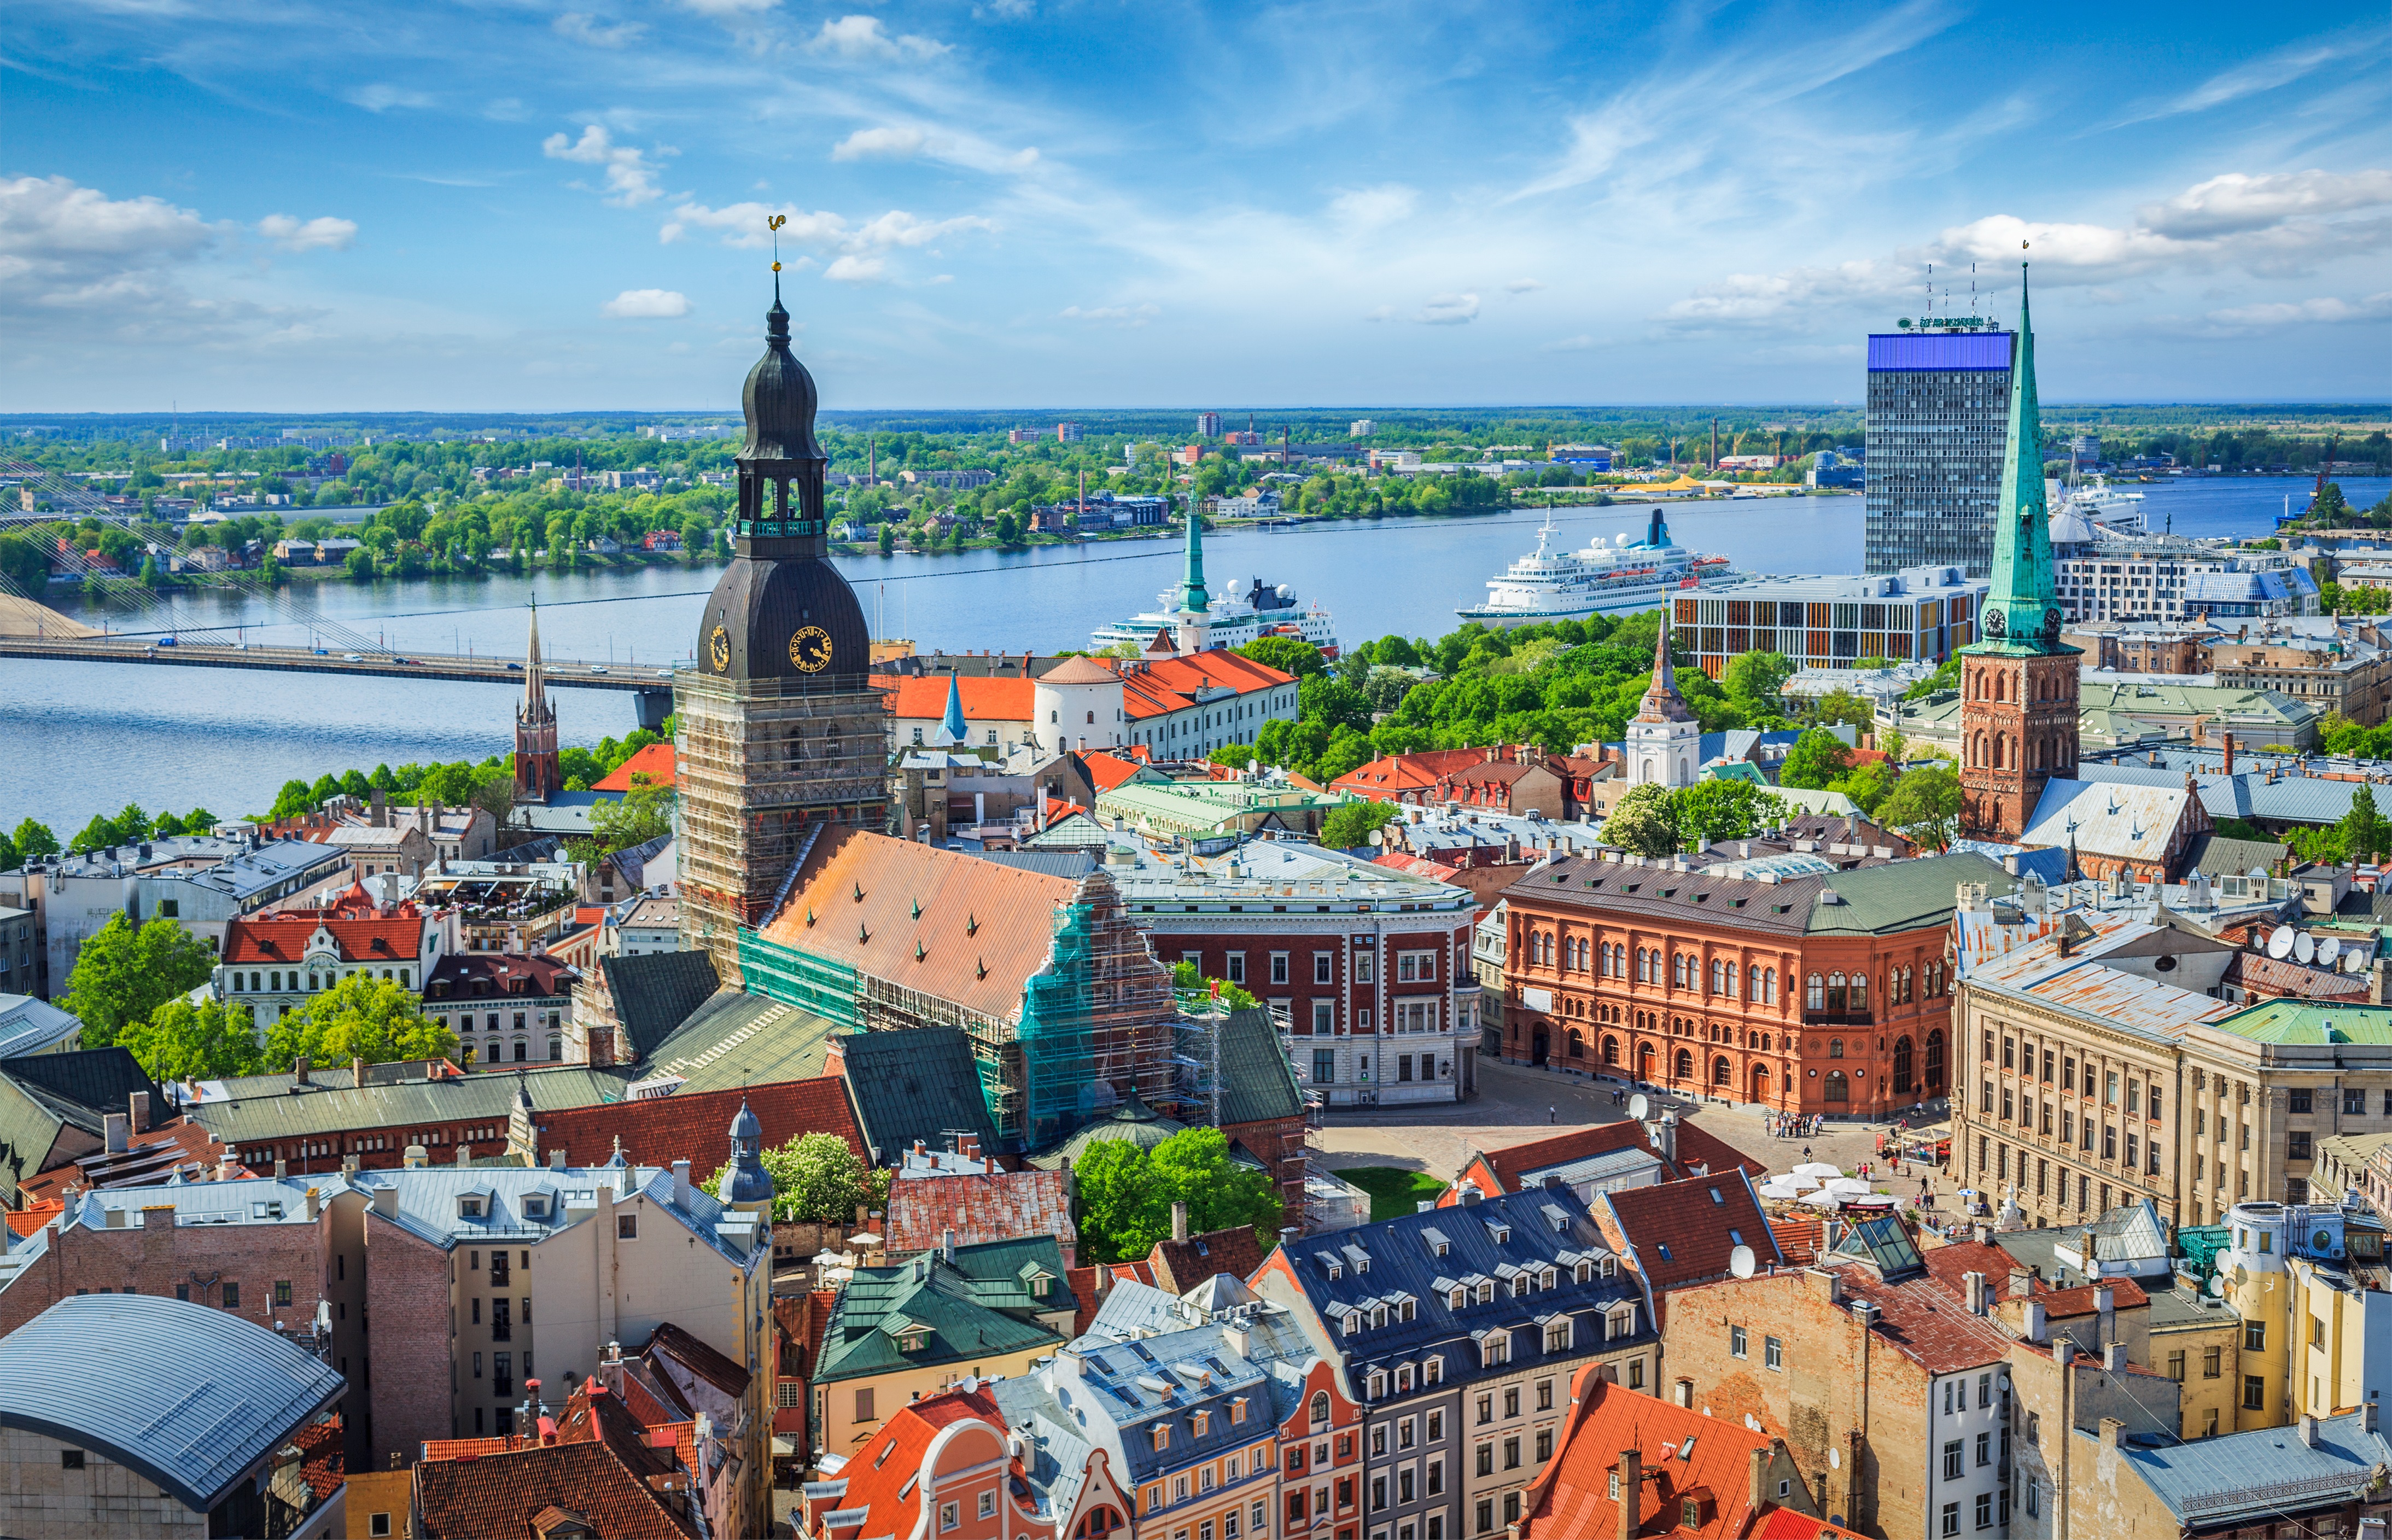 Svane Øst Timor væg TOP must visit sights in Riga and Latvia | Baltic Travel Services Blog